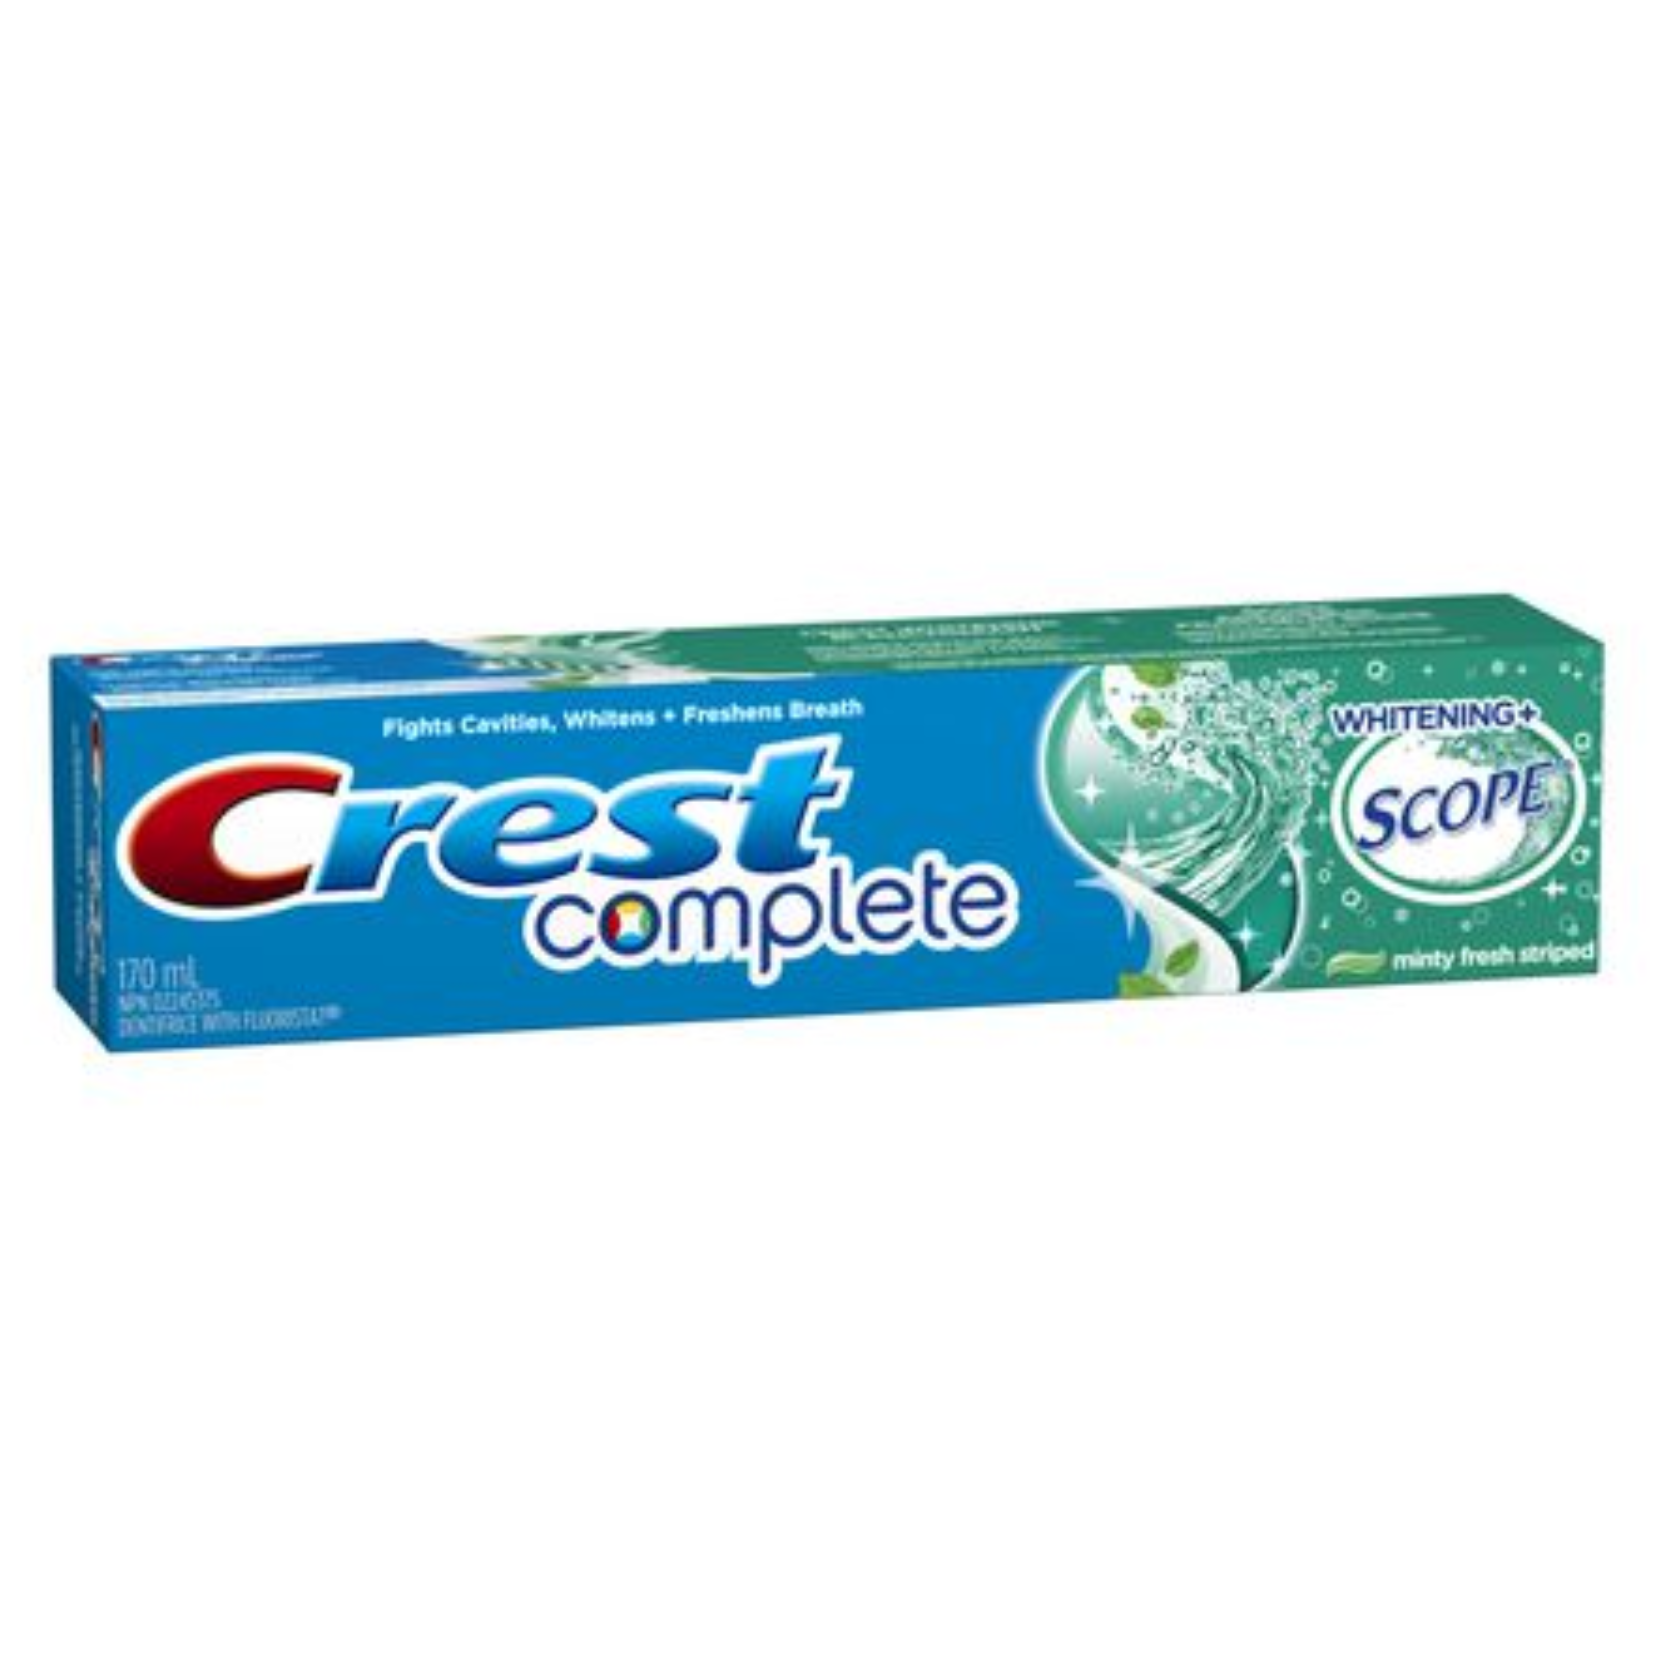 Crest Complete Plus Scope Toothpaste 170ml